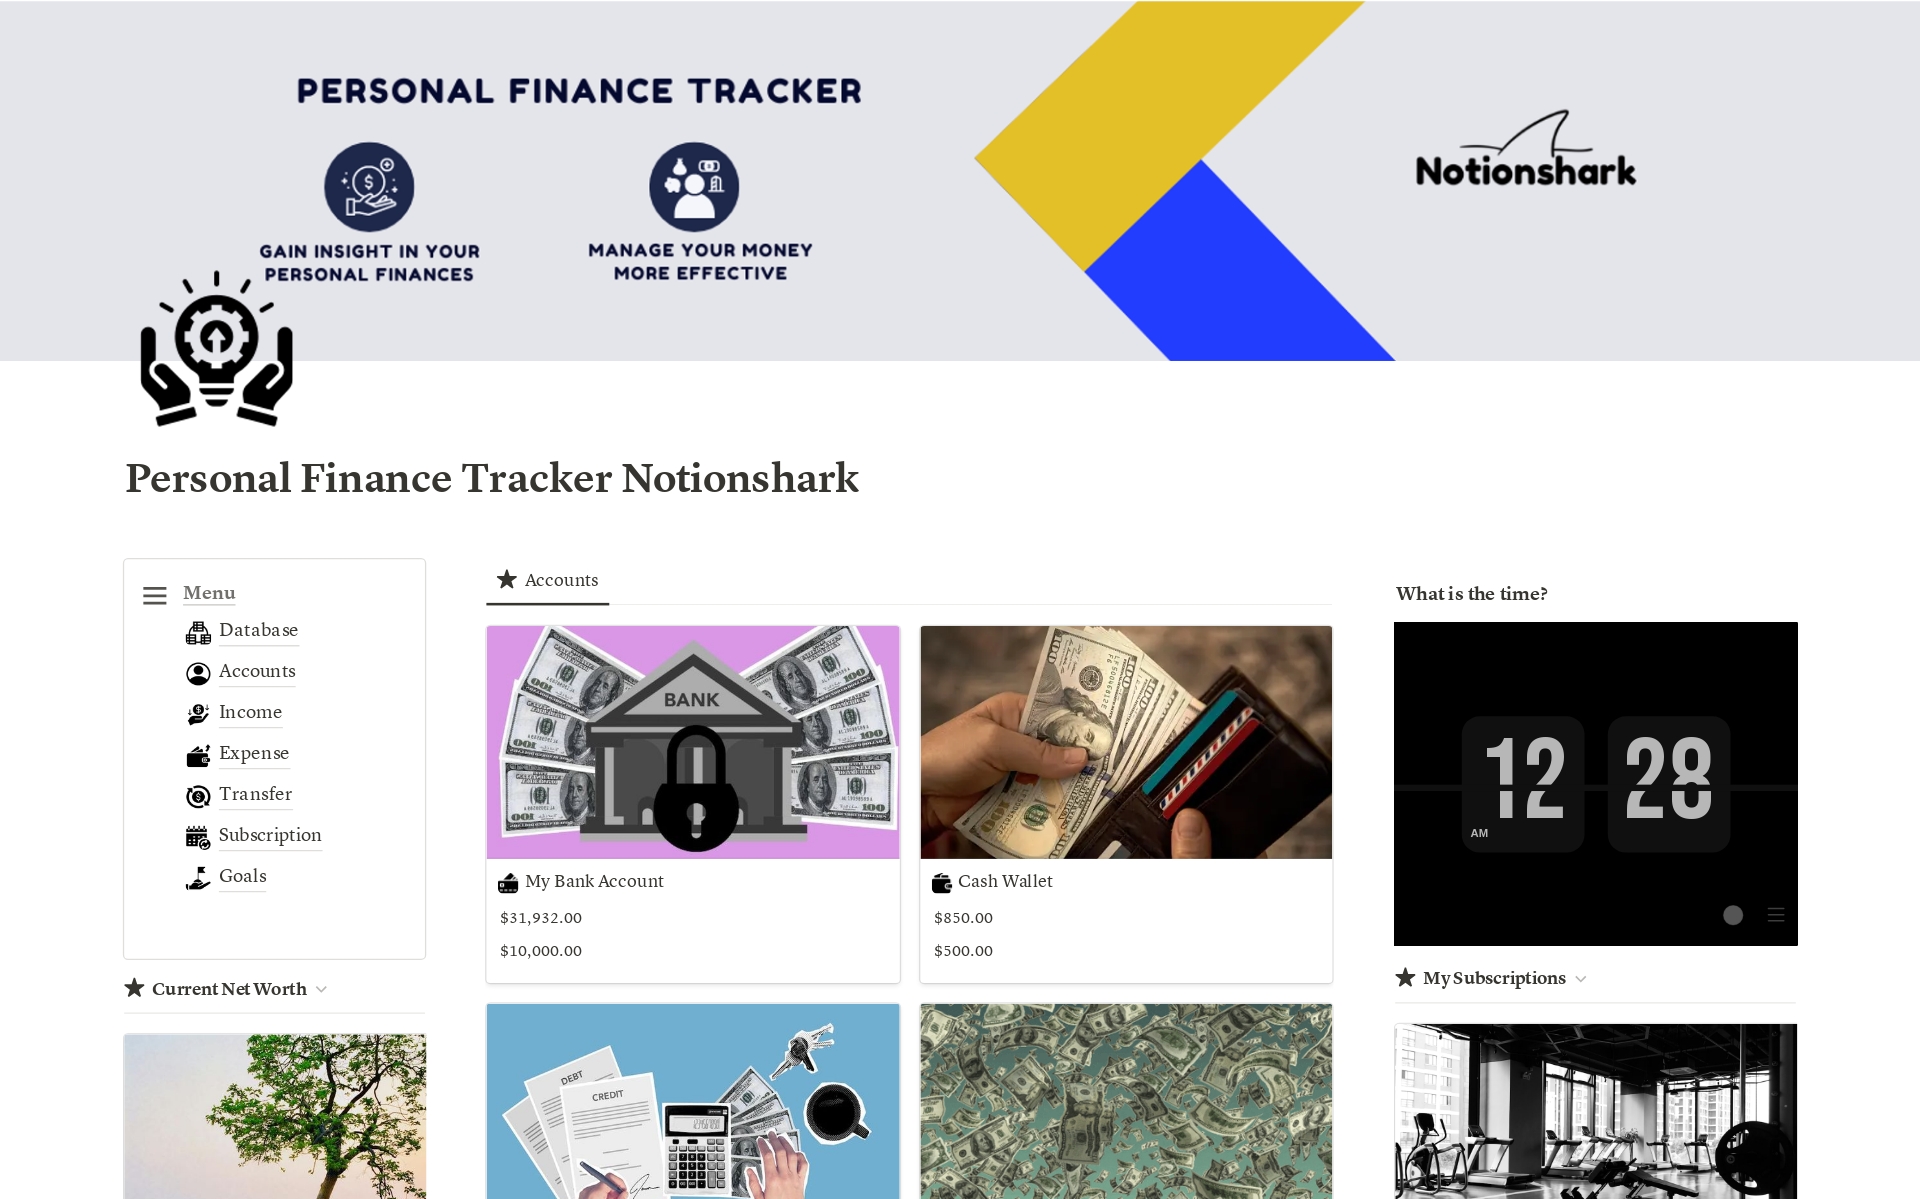 Aperçu du modèle de Personal Finance Tracker Notionshark